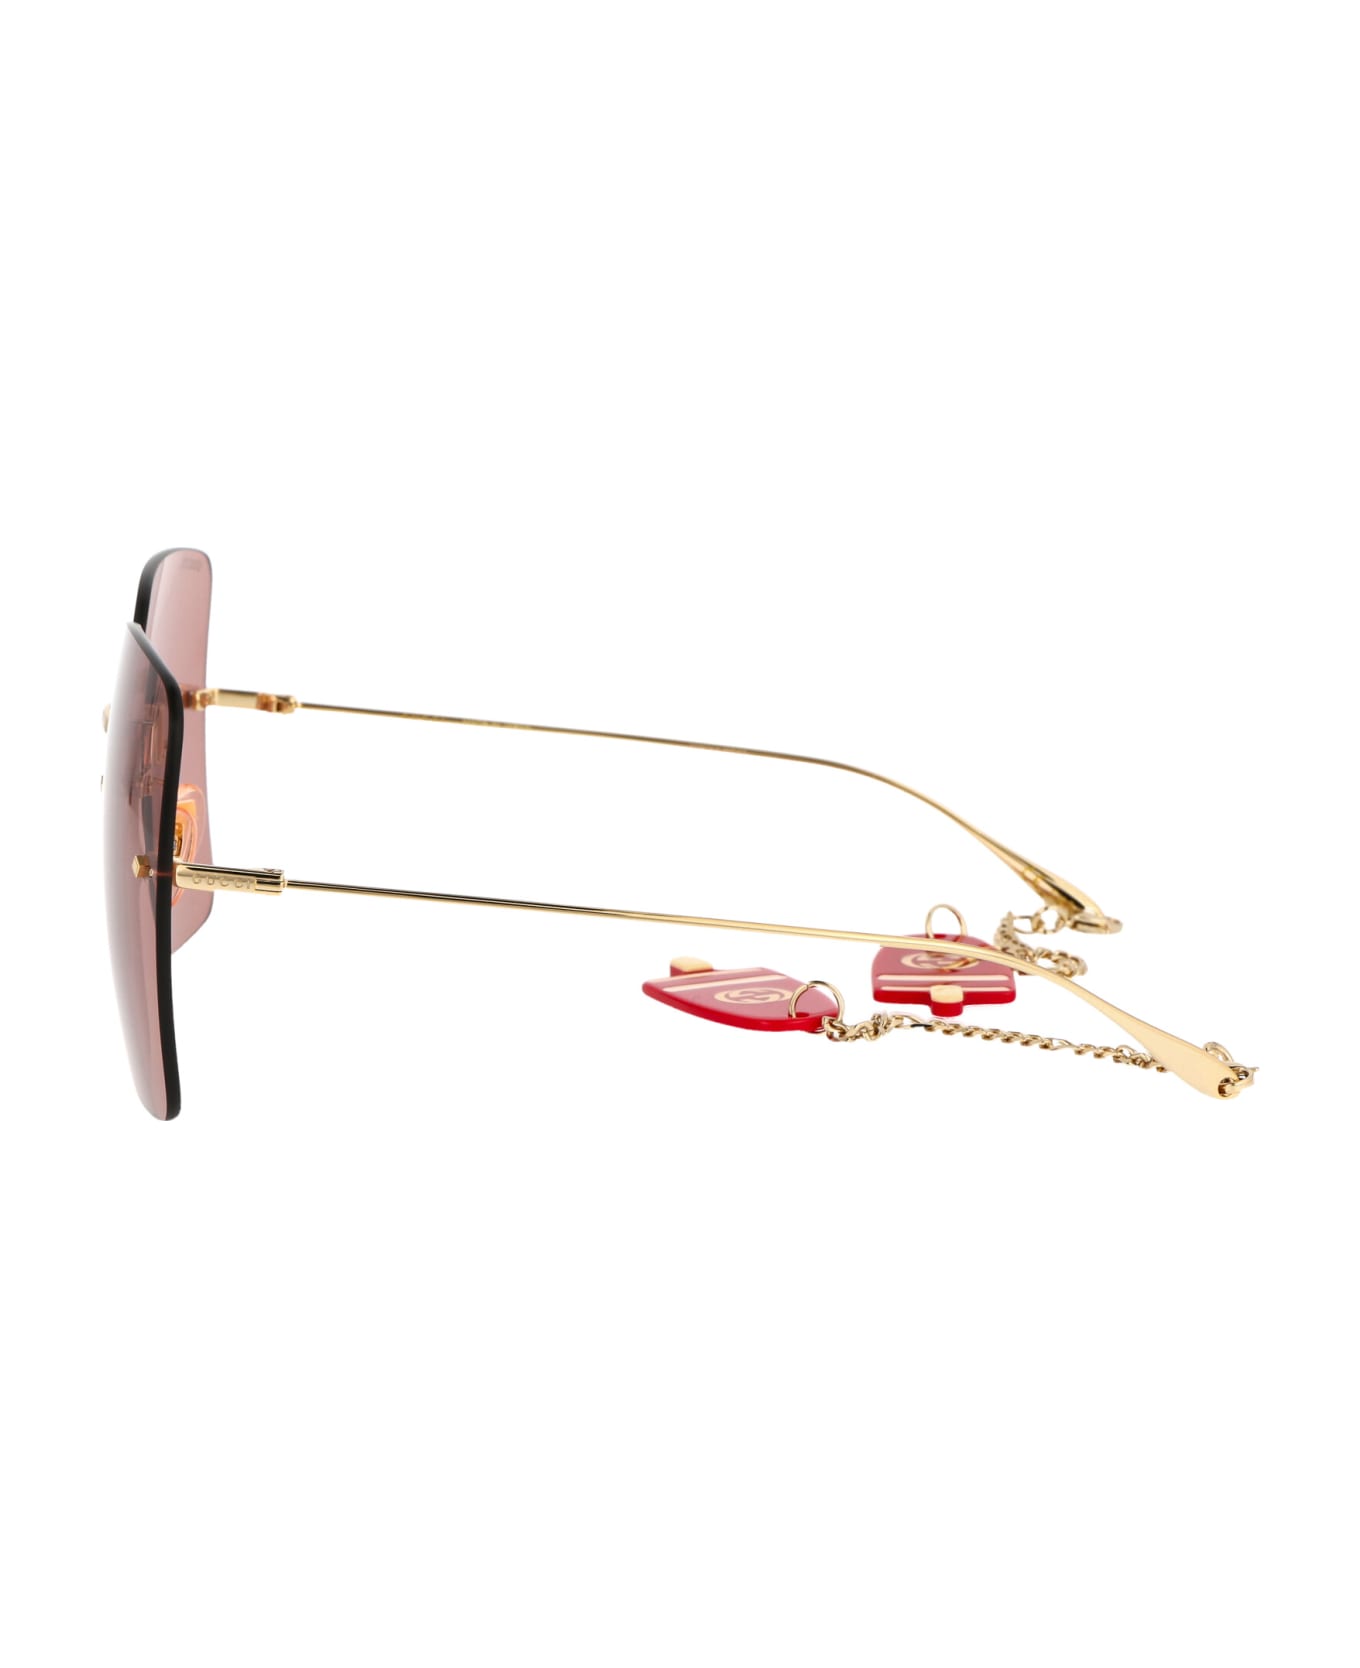 Gucci Eyewear Gg1147s Sunglasses - 005 GOLD GOLD RED